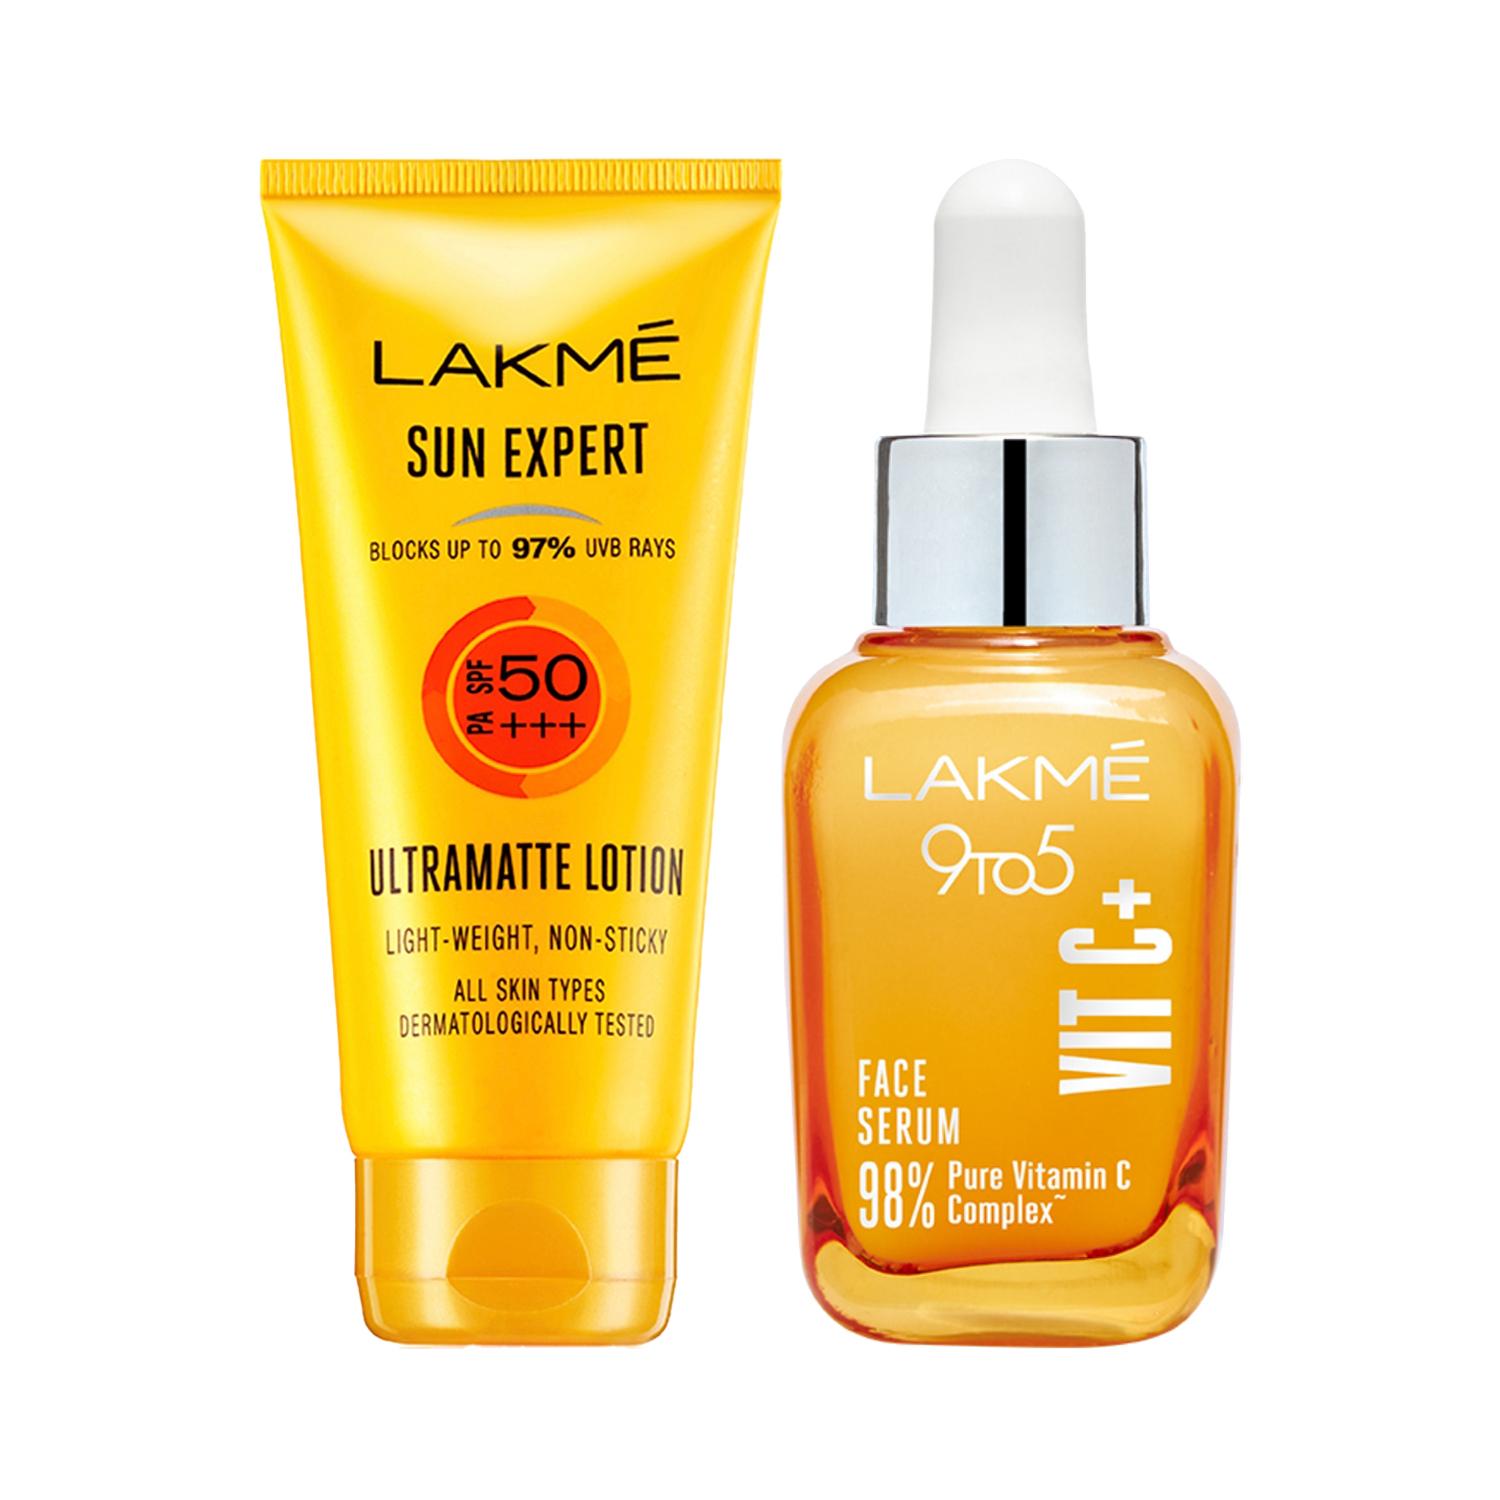 Lakme | Lakme Vitamin C Serum & Matte Lotion Sunscreen